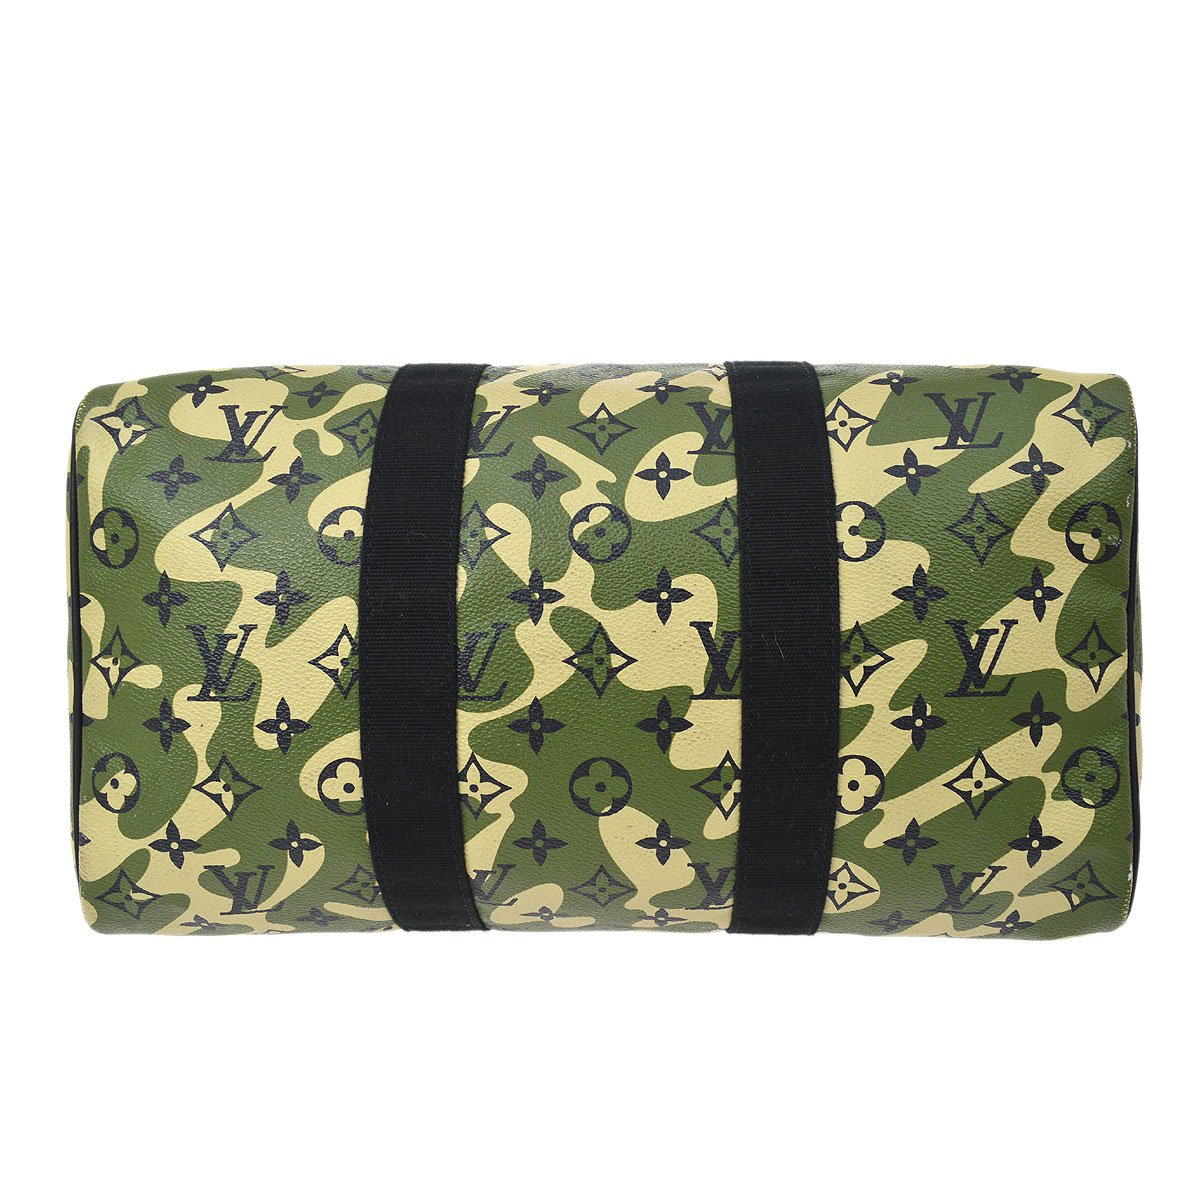 Louis Vuitton Speedy 35 Handbag Purse Green Monogramouflage M95773 AA3008  88187